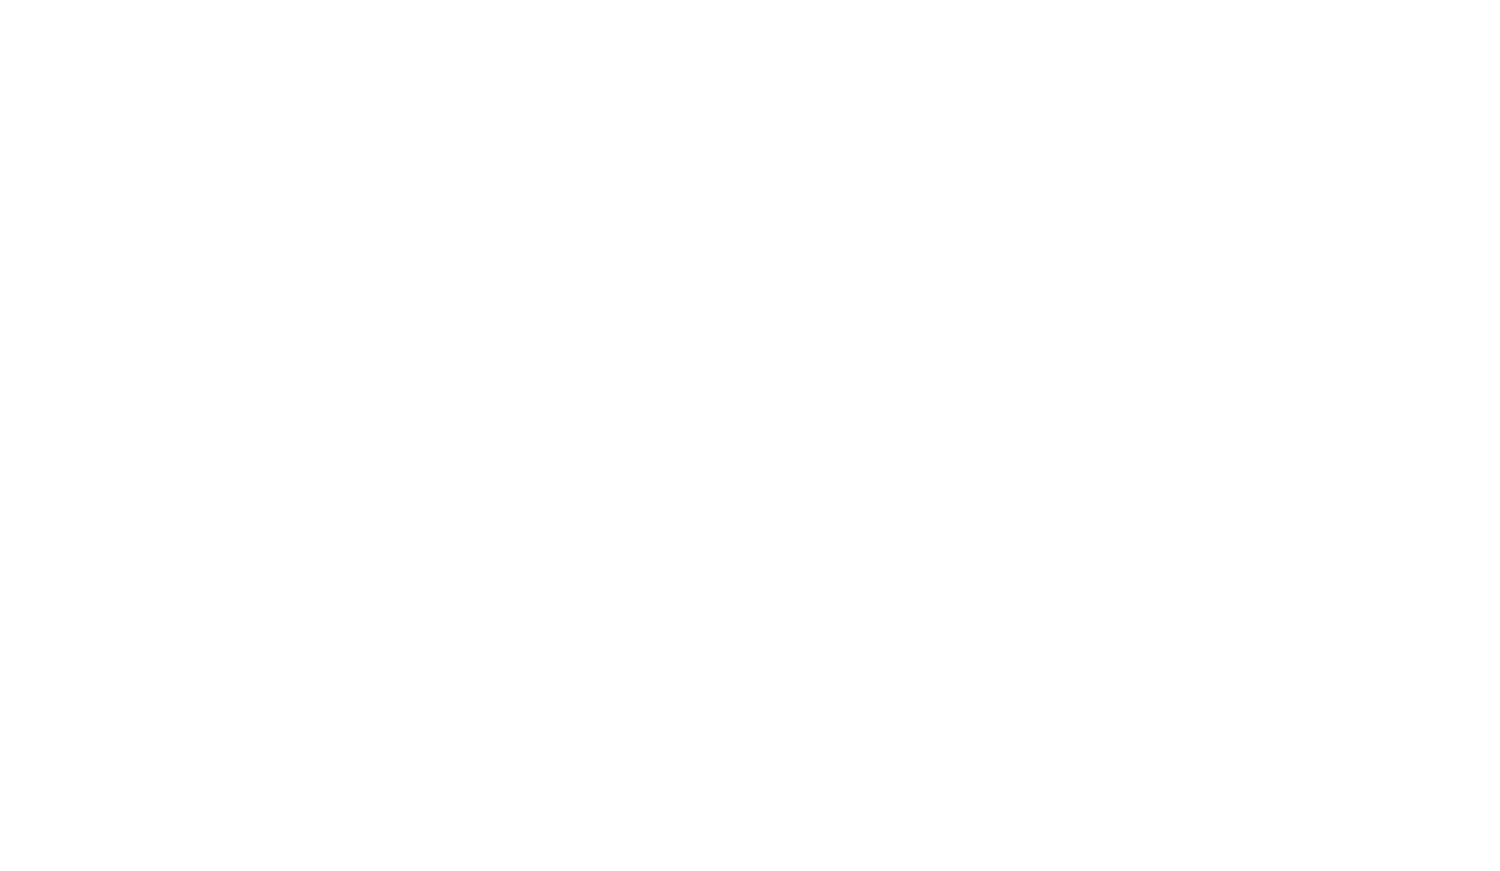 Philip Singleton for Congress